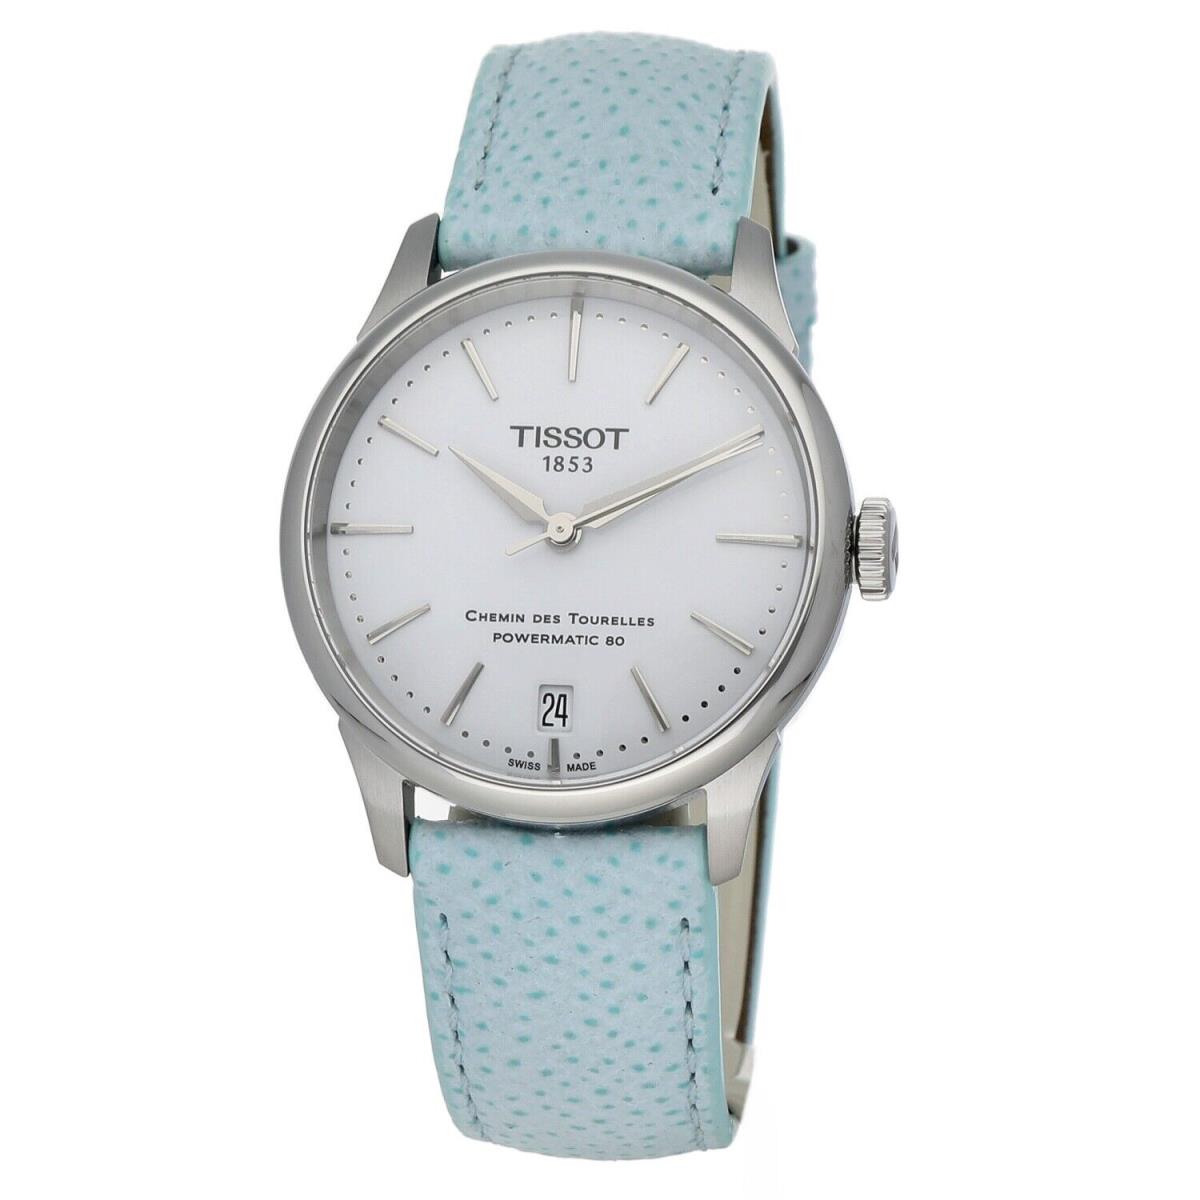 Tissot T139.207.16.011.00 Chemin Des Tourelles Powermatic 80 34 mm Wrist Watch